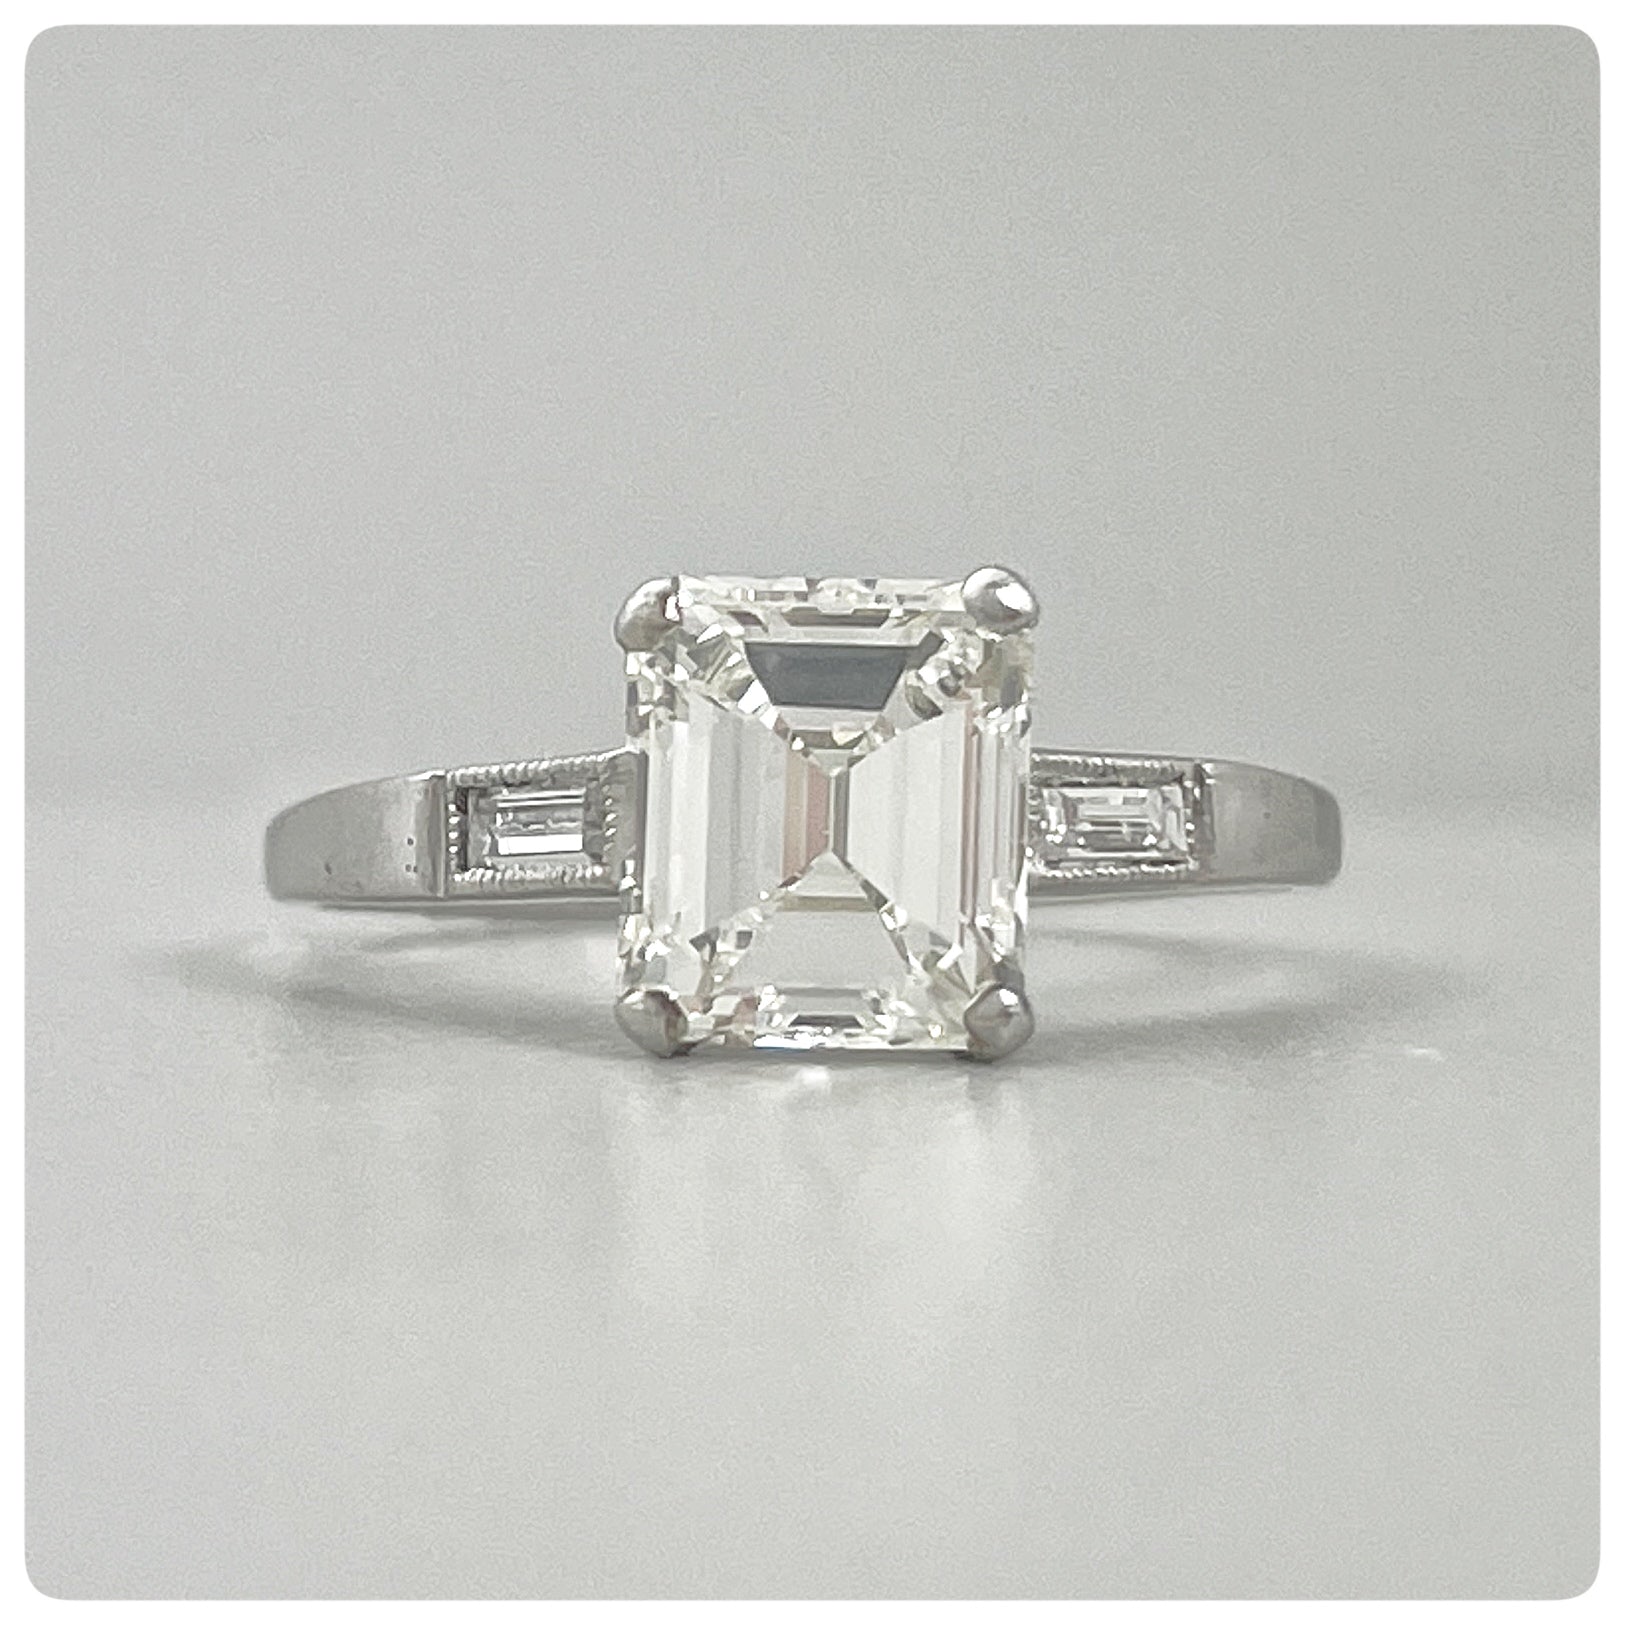 Platinum and Emerald-Cut Diamond Ring with Baguettes, Twentieth Century